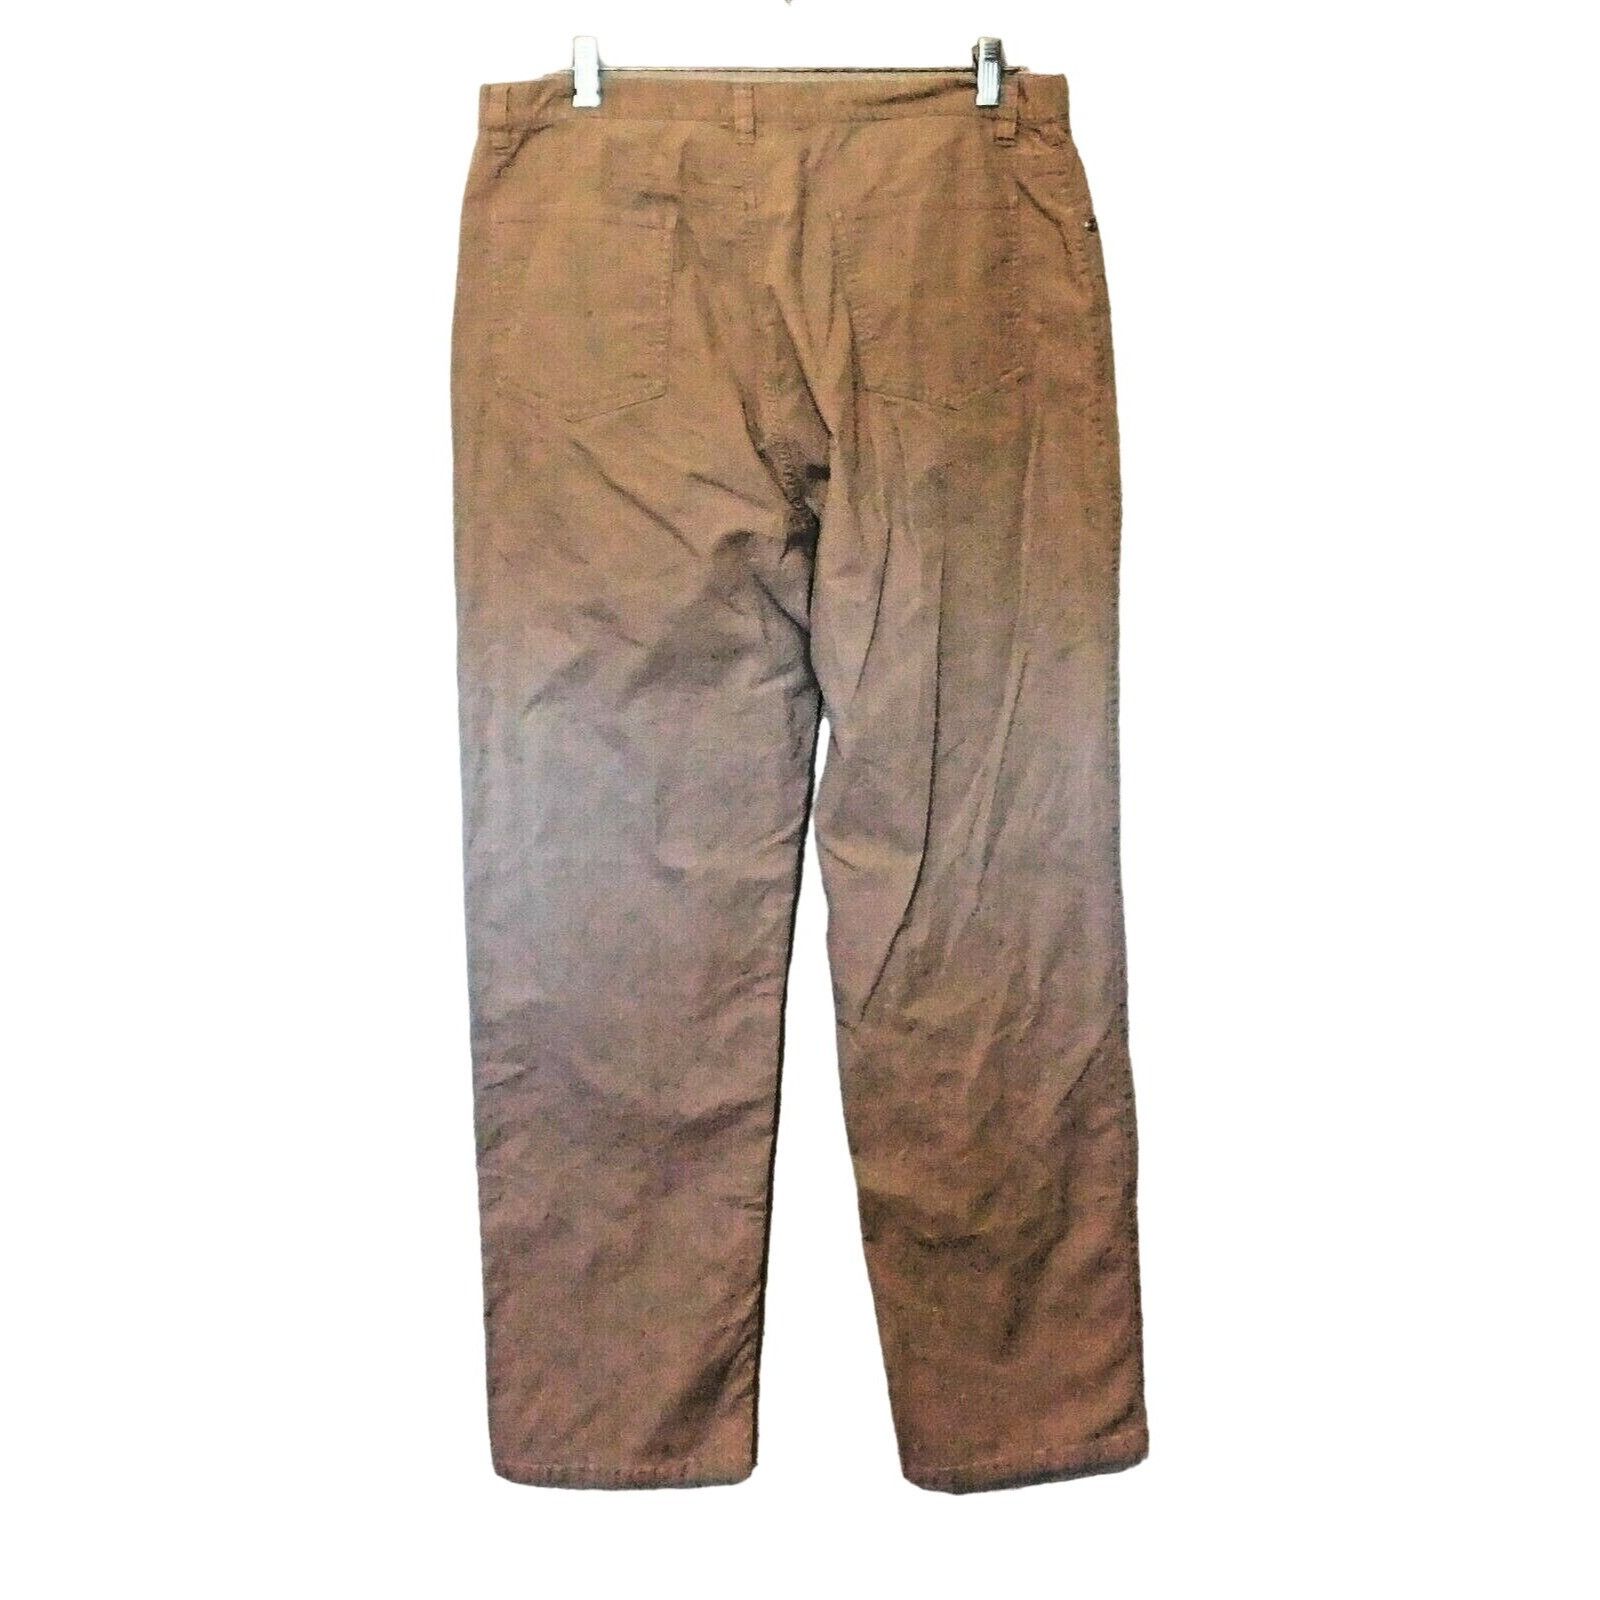 Chicos Chico's Design 2.5 Corduroy Pants L 14 Tan Straight Leg Size 36" / US 14 / IT 50 - 5 Thumbnail